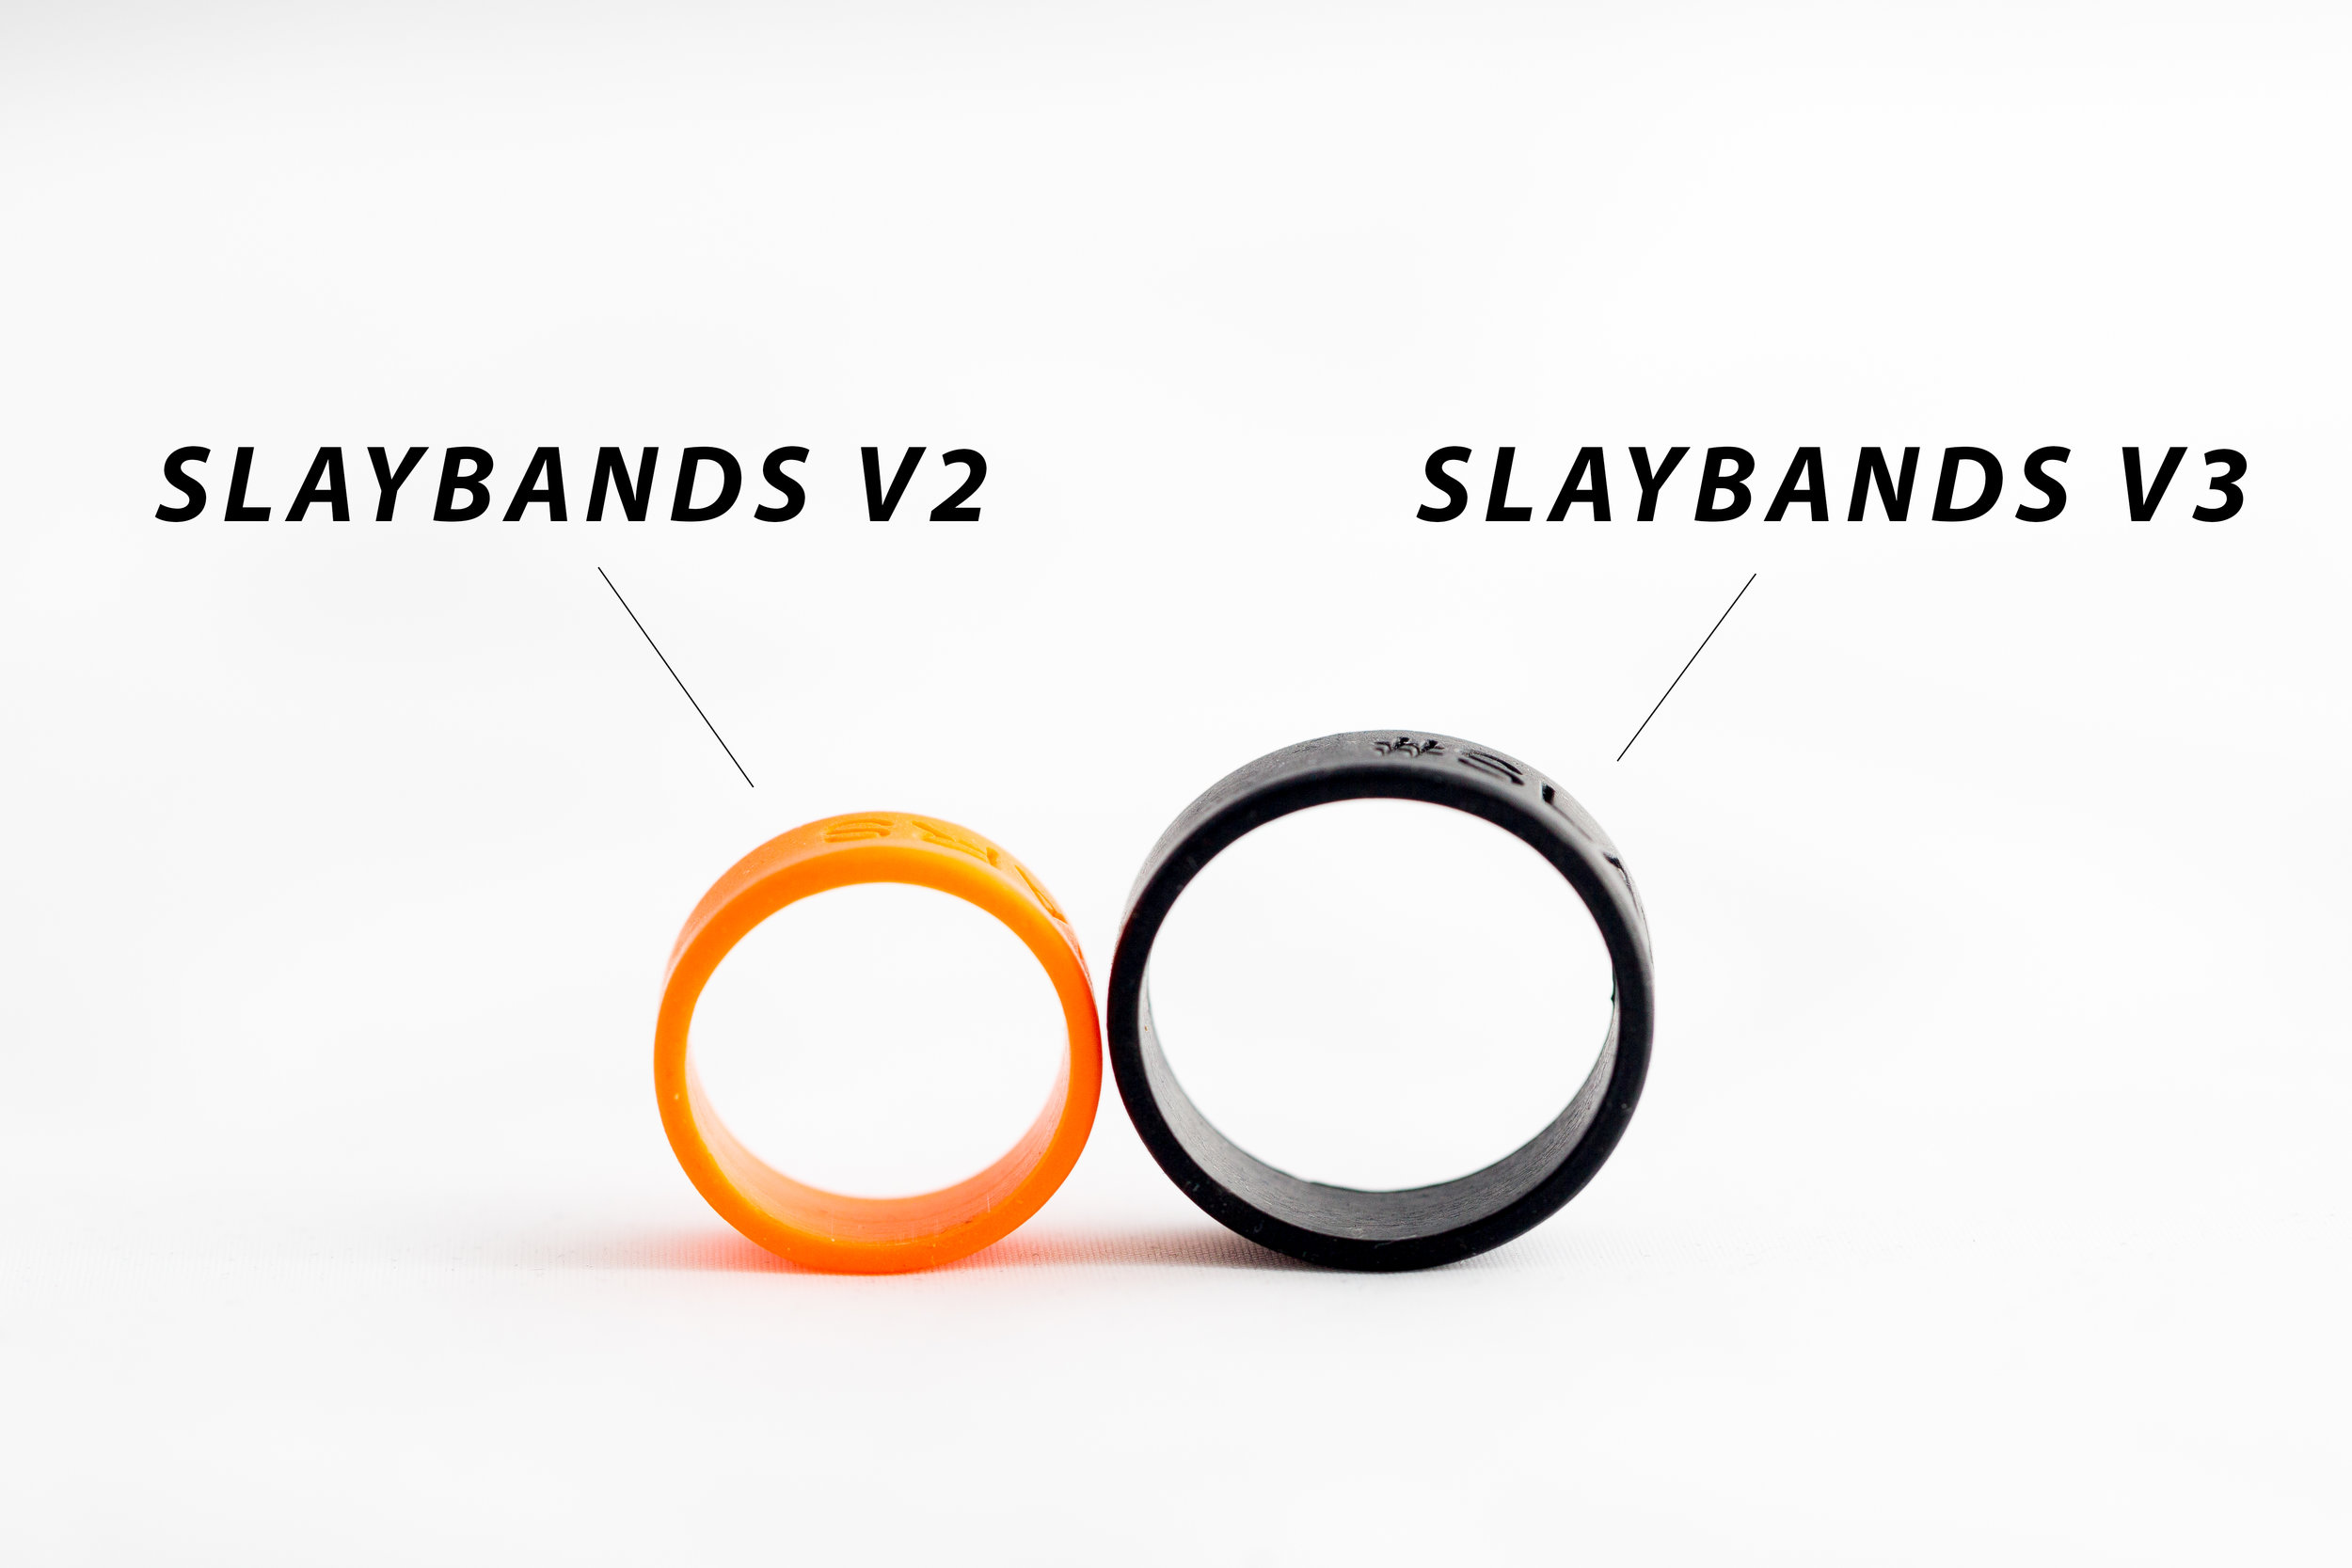 slaybands-v3-vs-v2-comparison-size-2.jpg